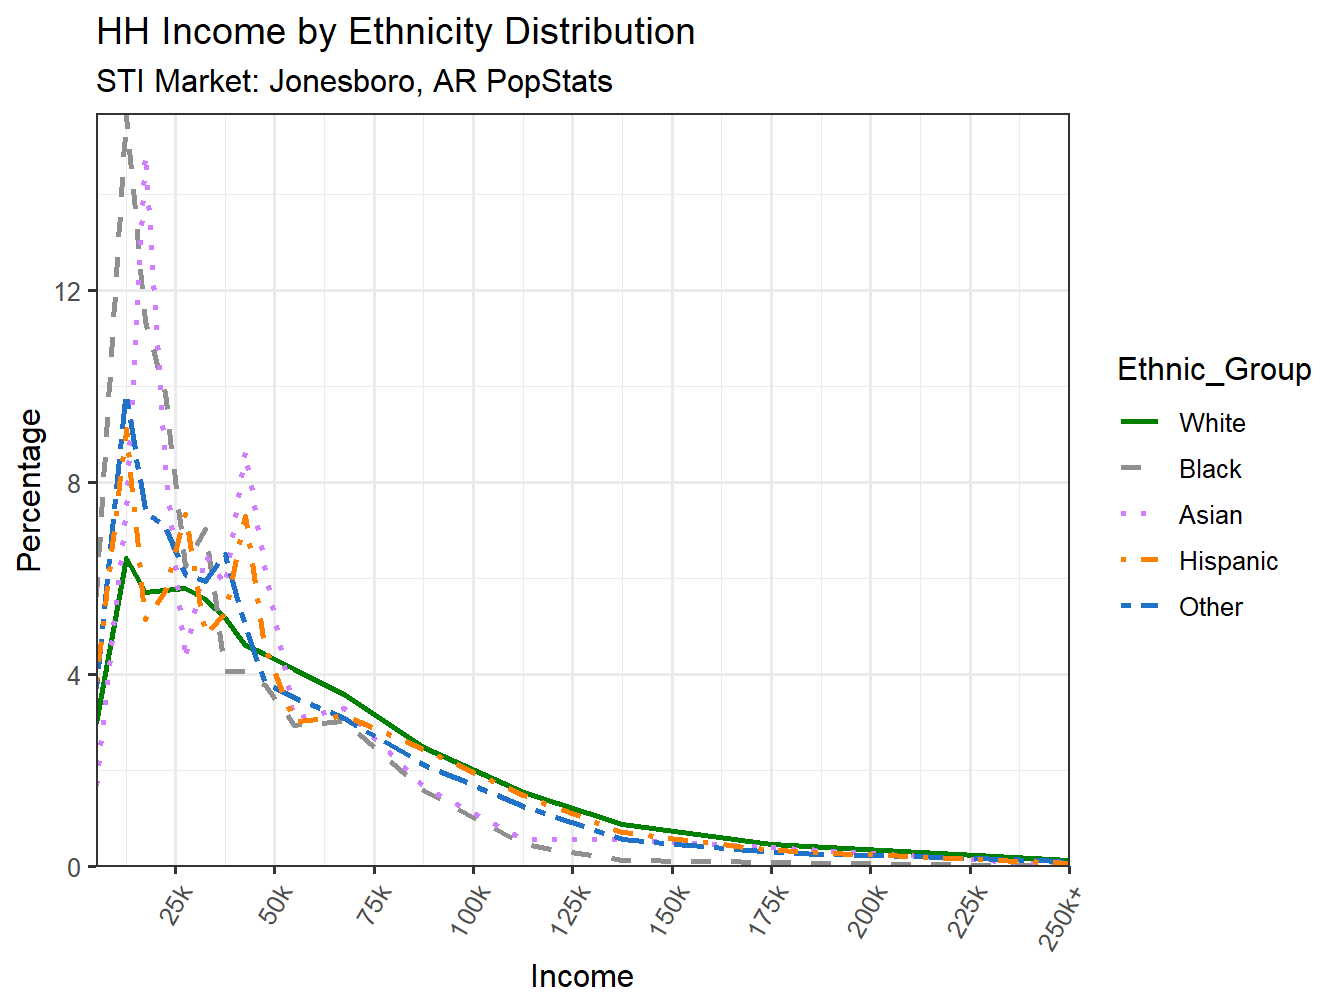 Income Distribution Line